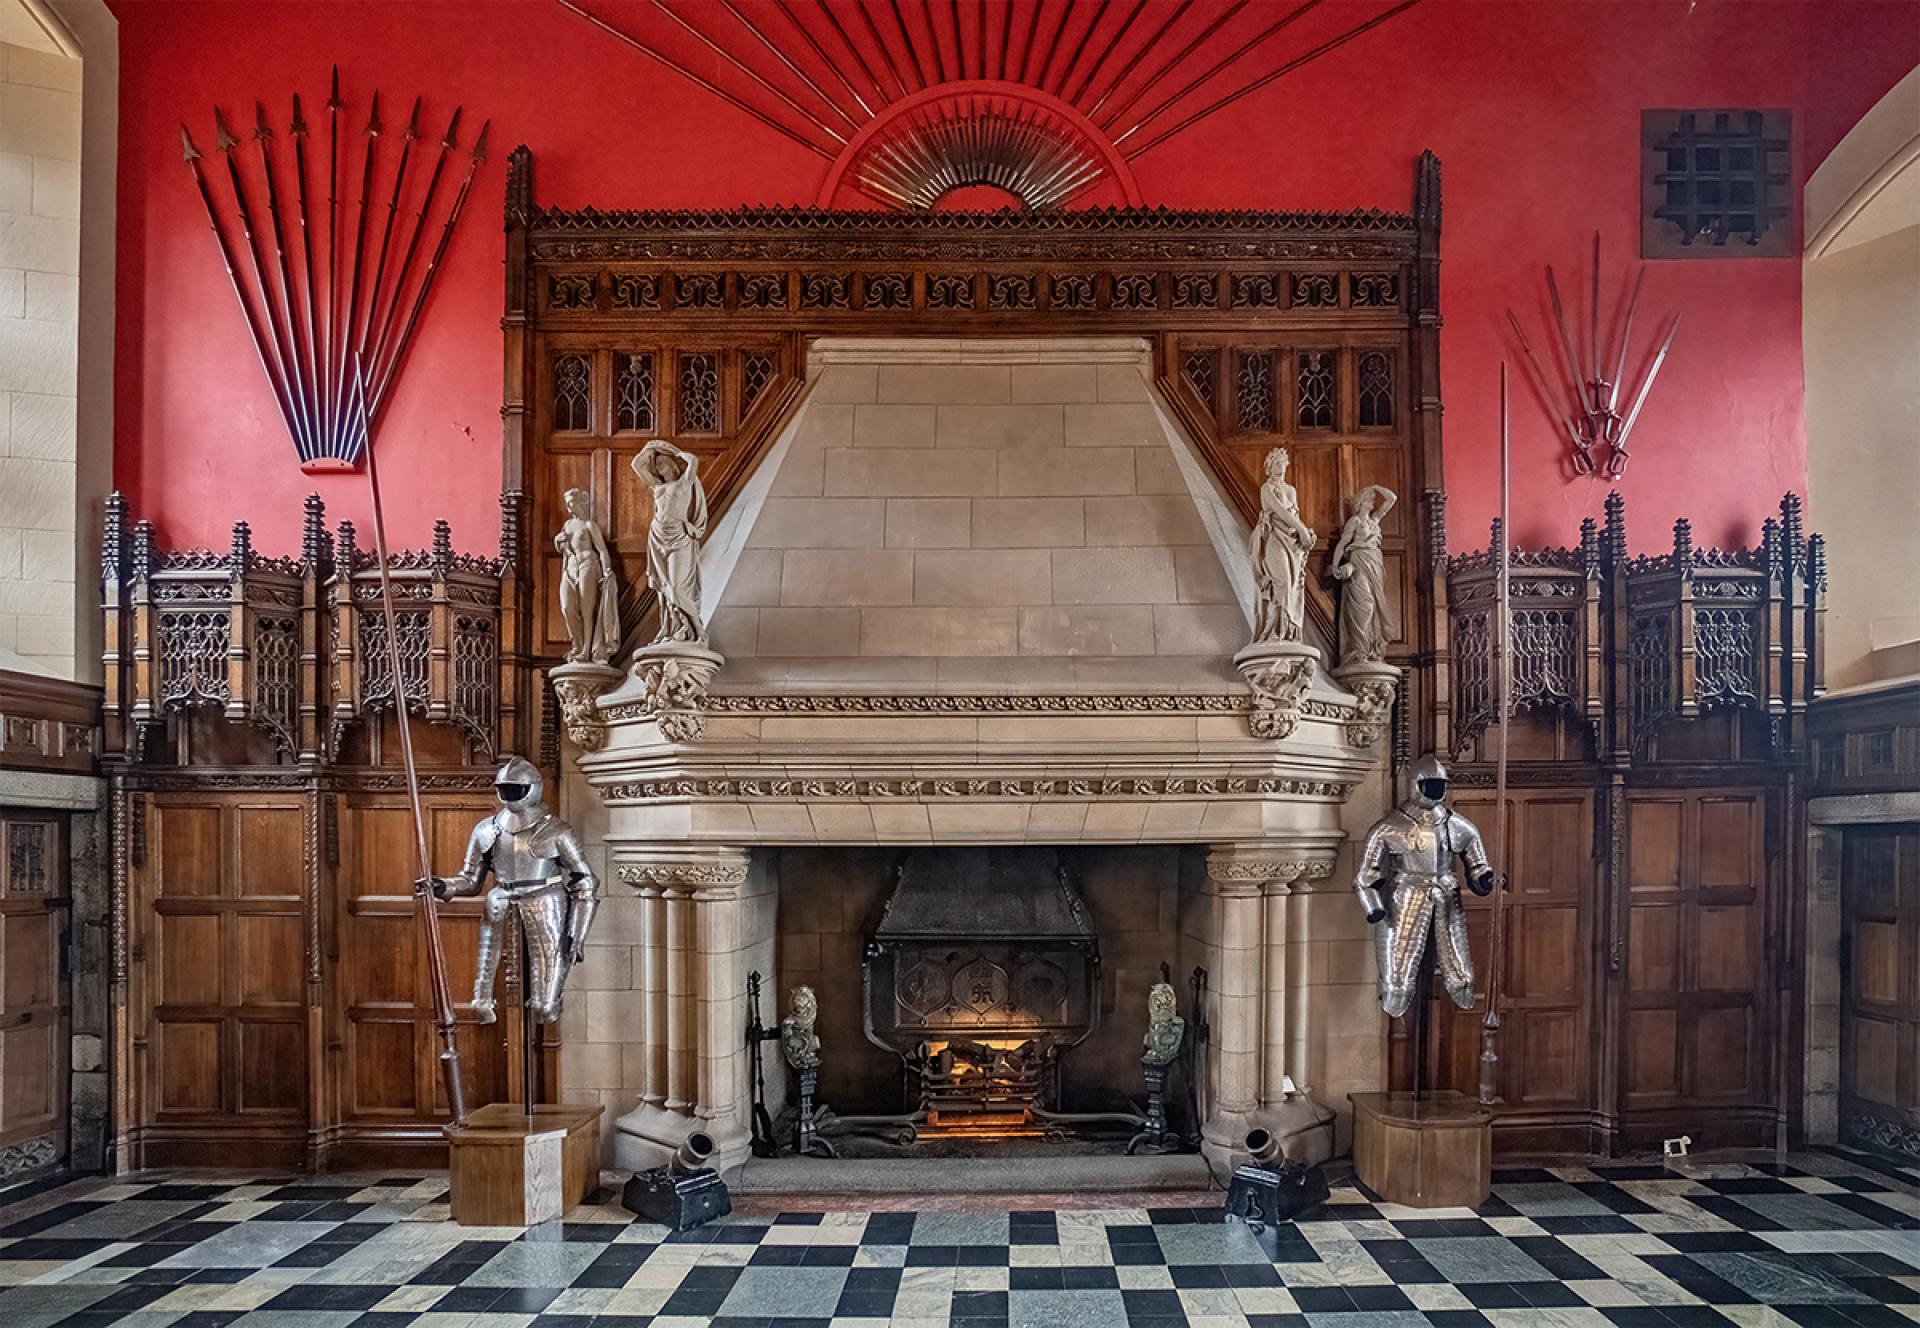 London Photography Awards Winner - Edinburgh Castle: Great Hall Interior